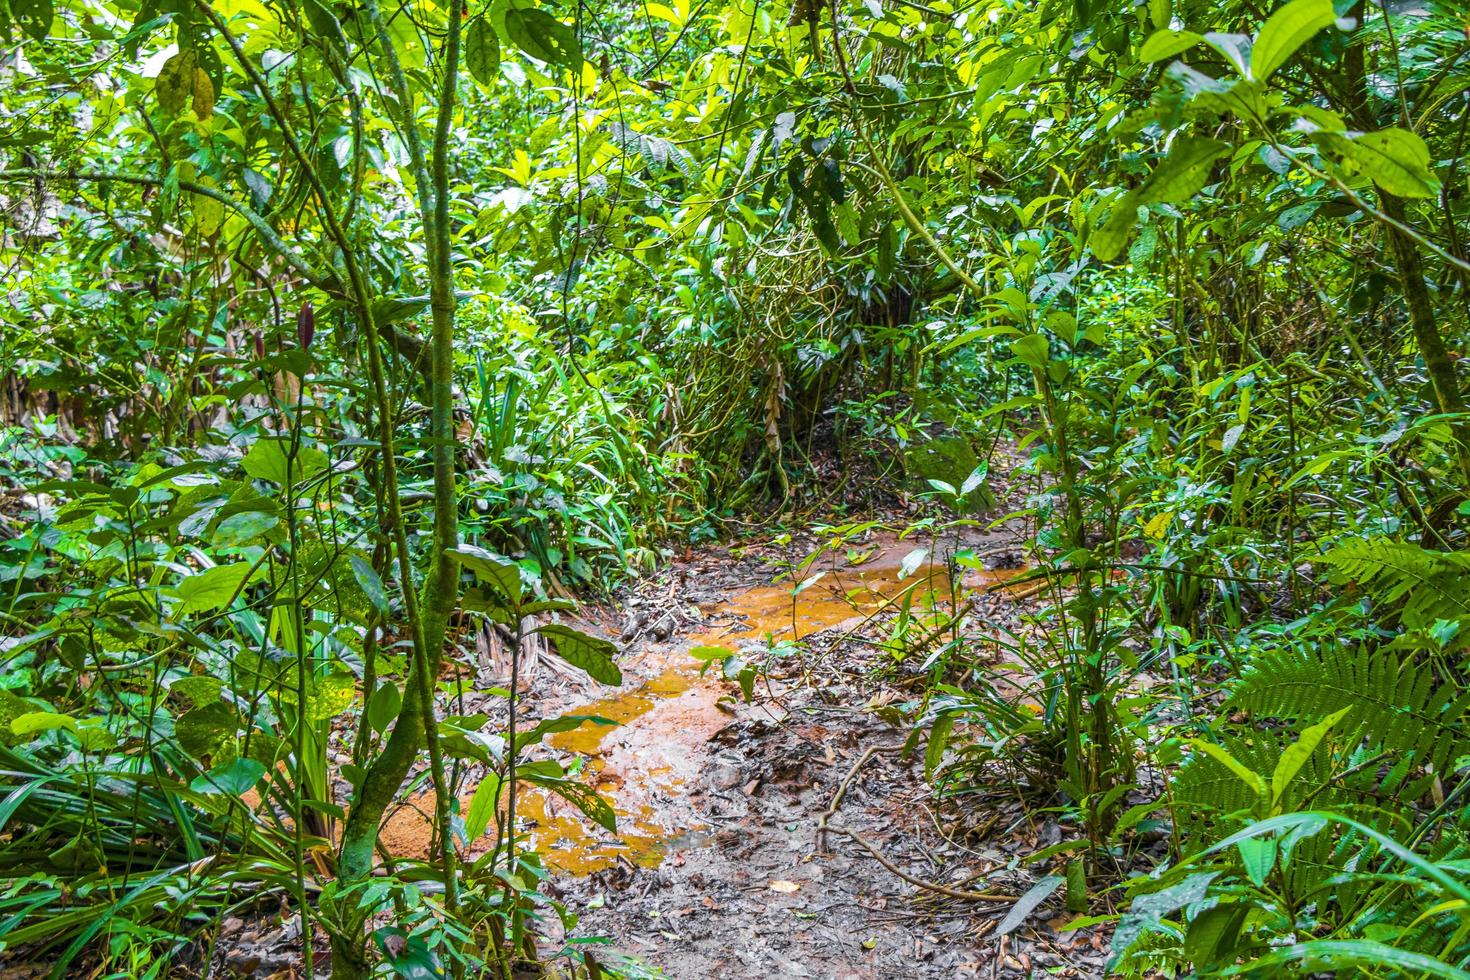 wandelpad in natuurlijke tropische jungle bos ilha grande brazilië. foto